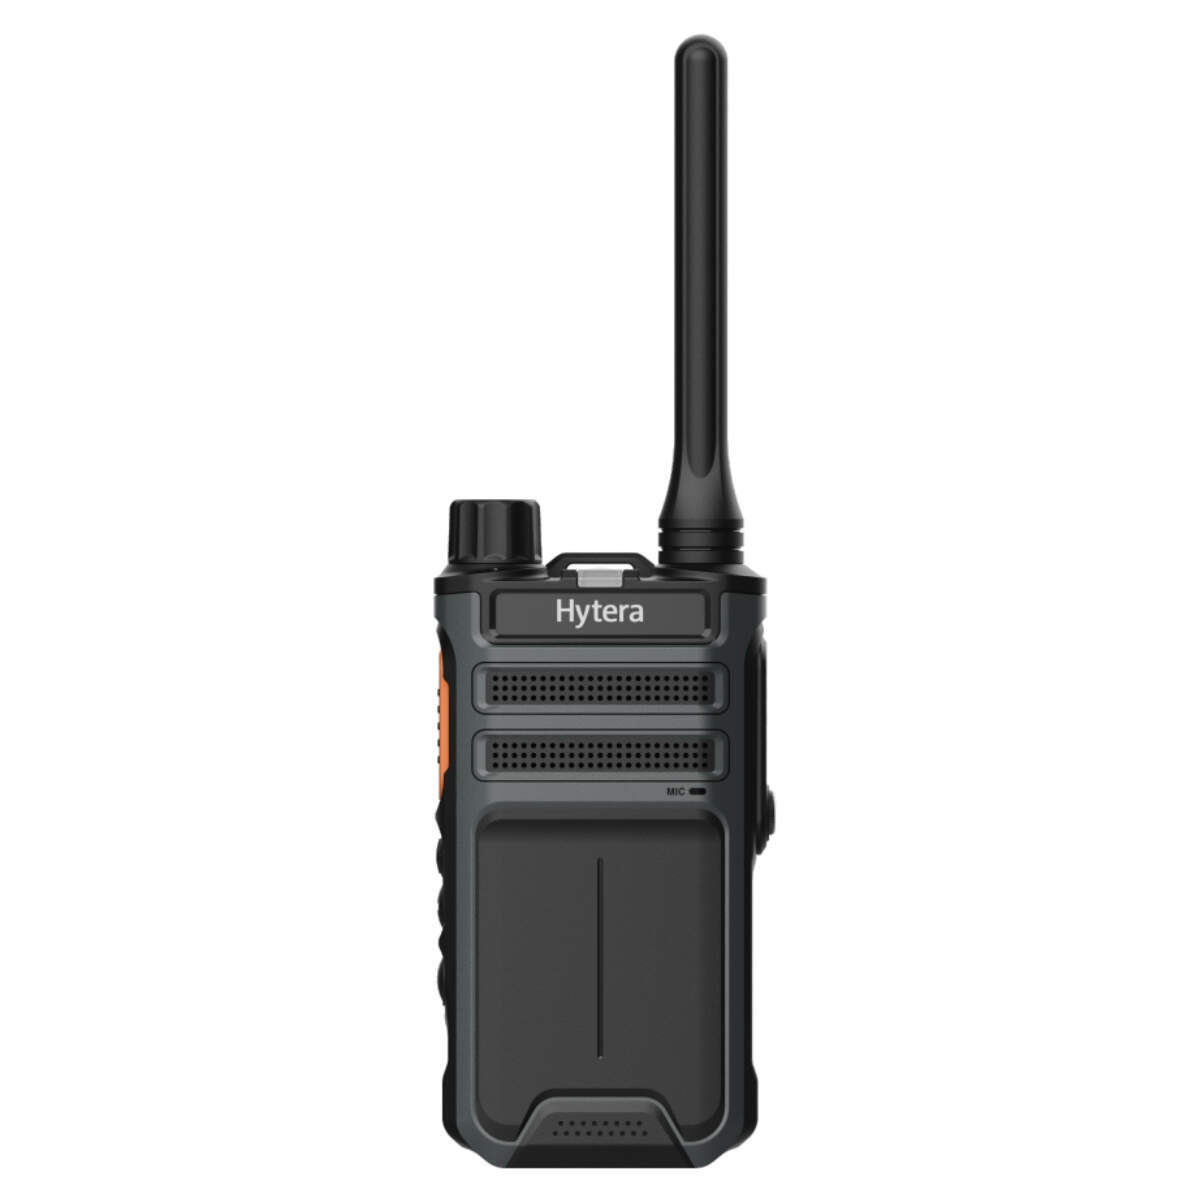 Set van 2 Hytera AP515LF + draagtas - Portofoons-walkies zonder licentie PMR446